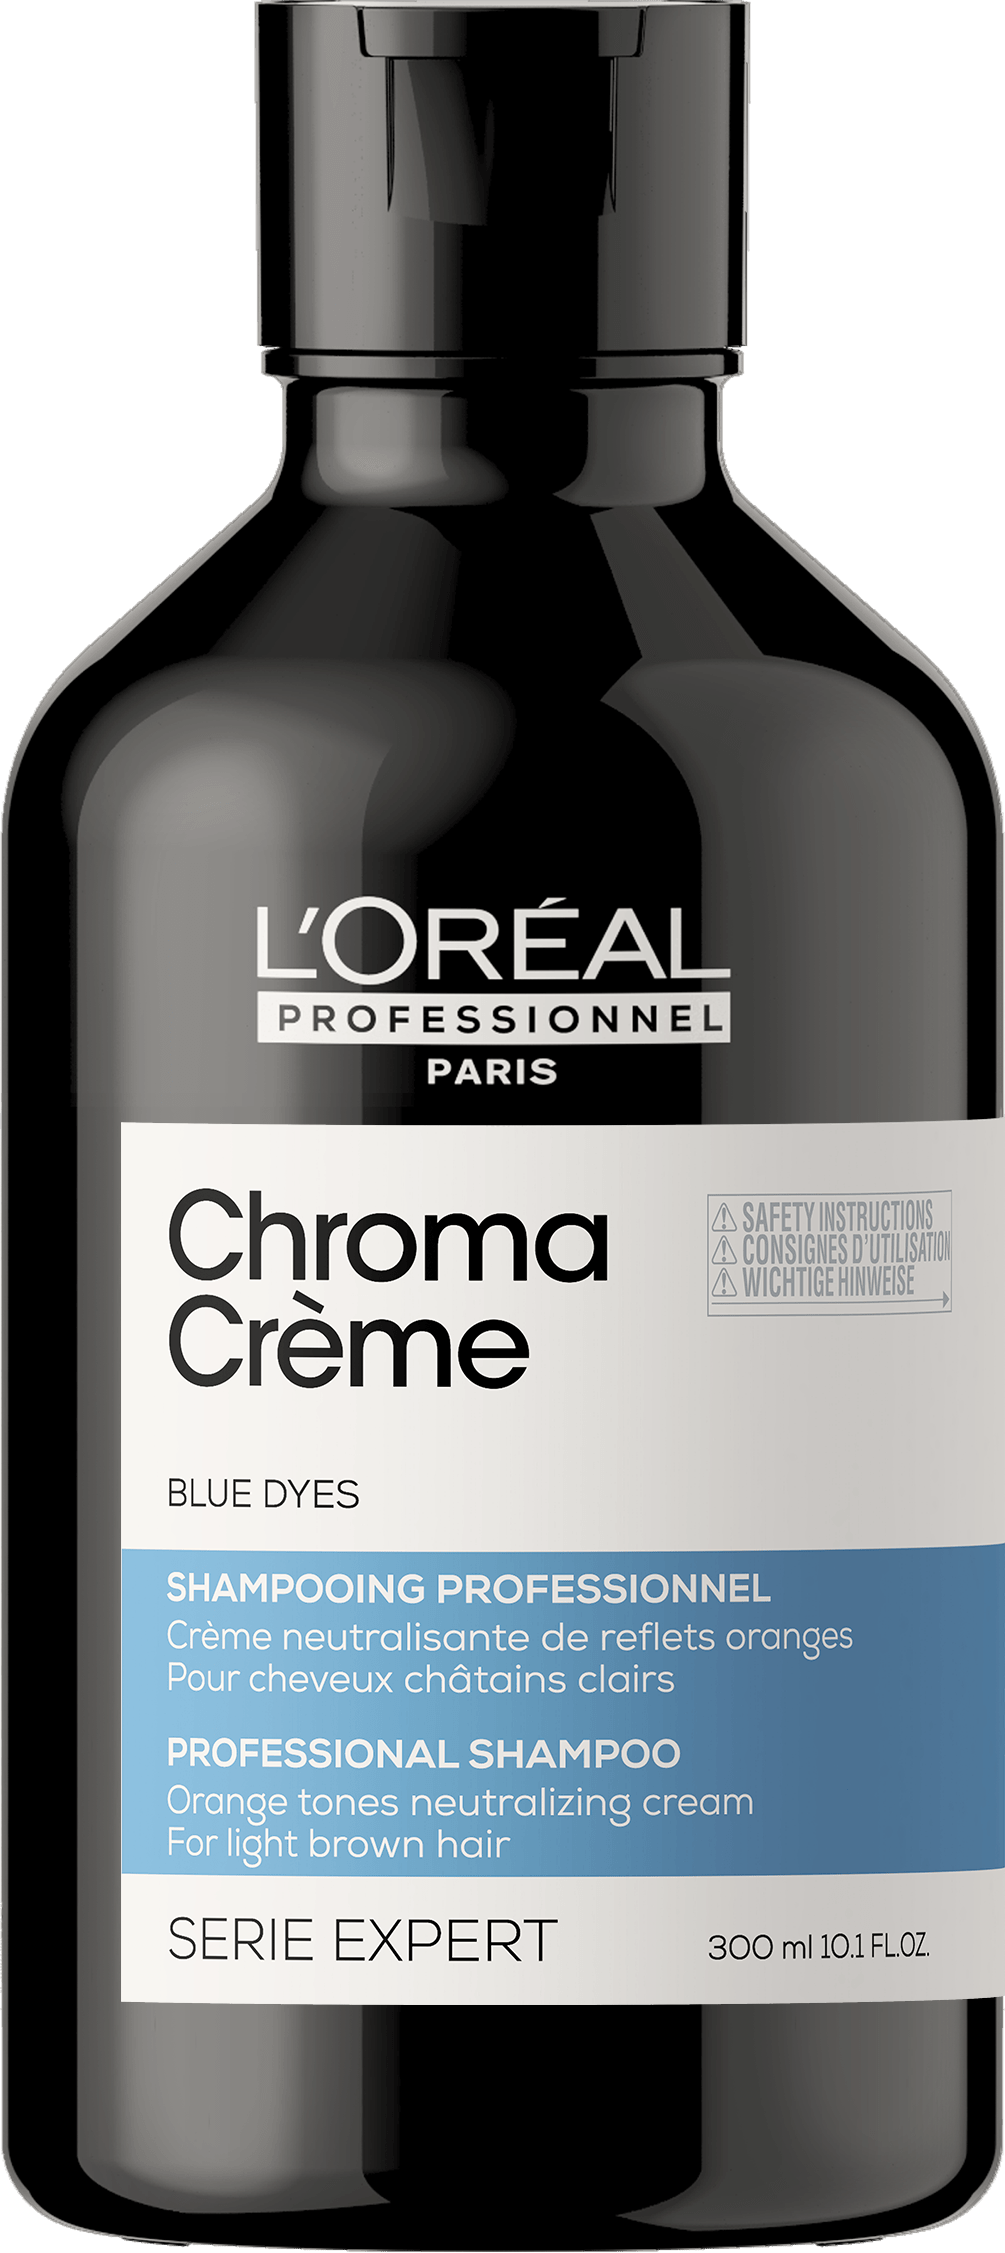 L'OREAL CHROMA CREME BLUE DYES SHAMPOO 300ML